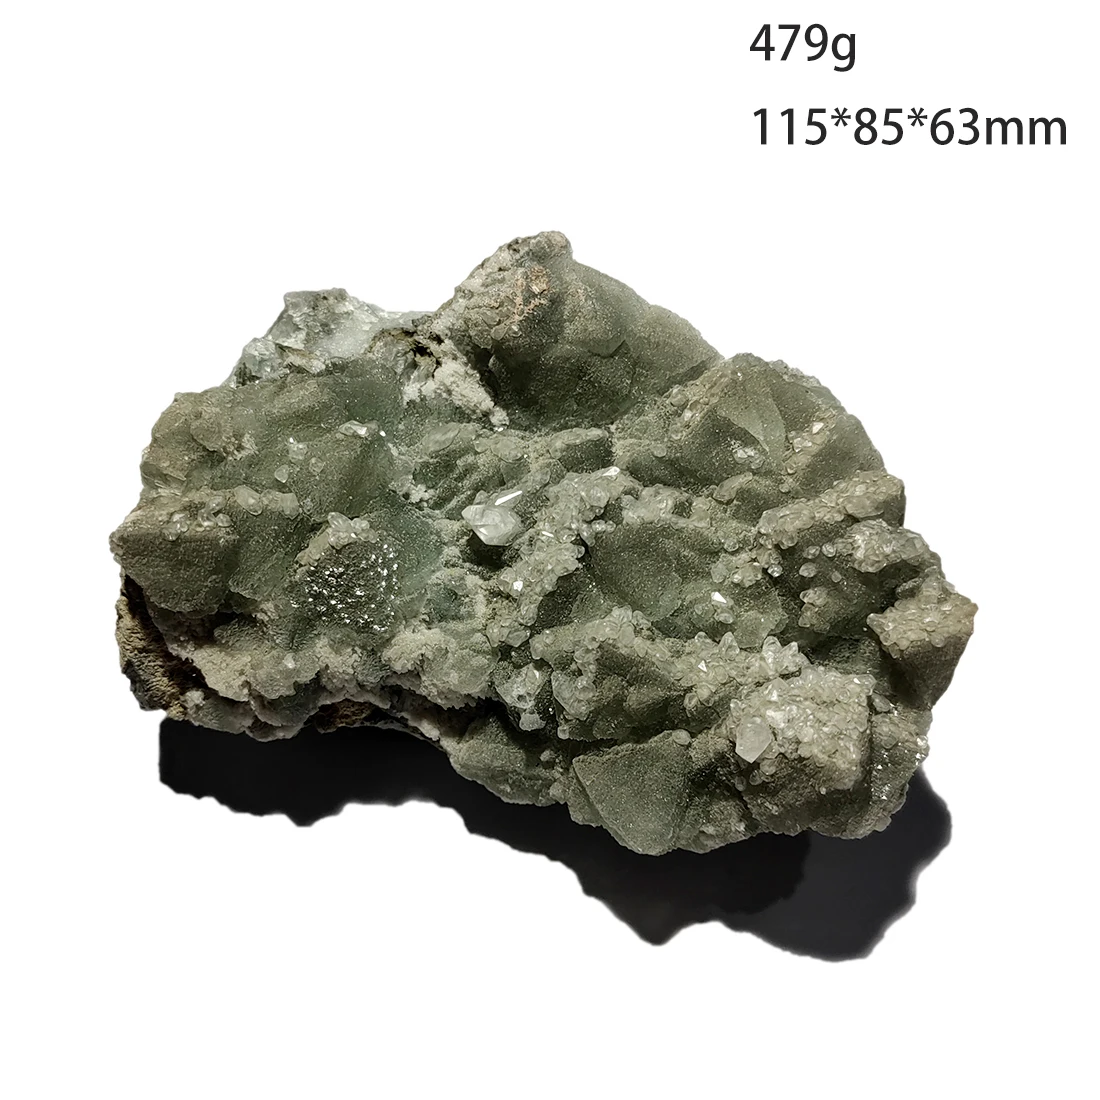 

C3-7B 100% Natural Green Fluorite Cluster Quartz Mineral Crystal Specimen Fujian Province China